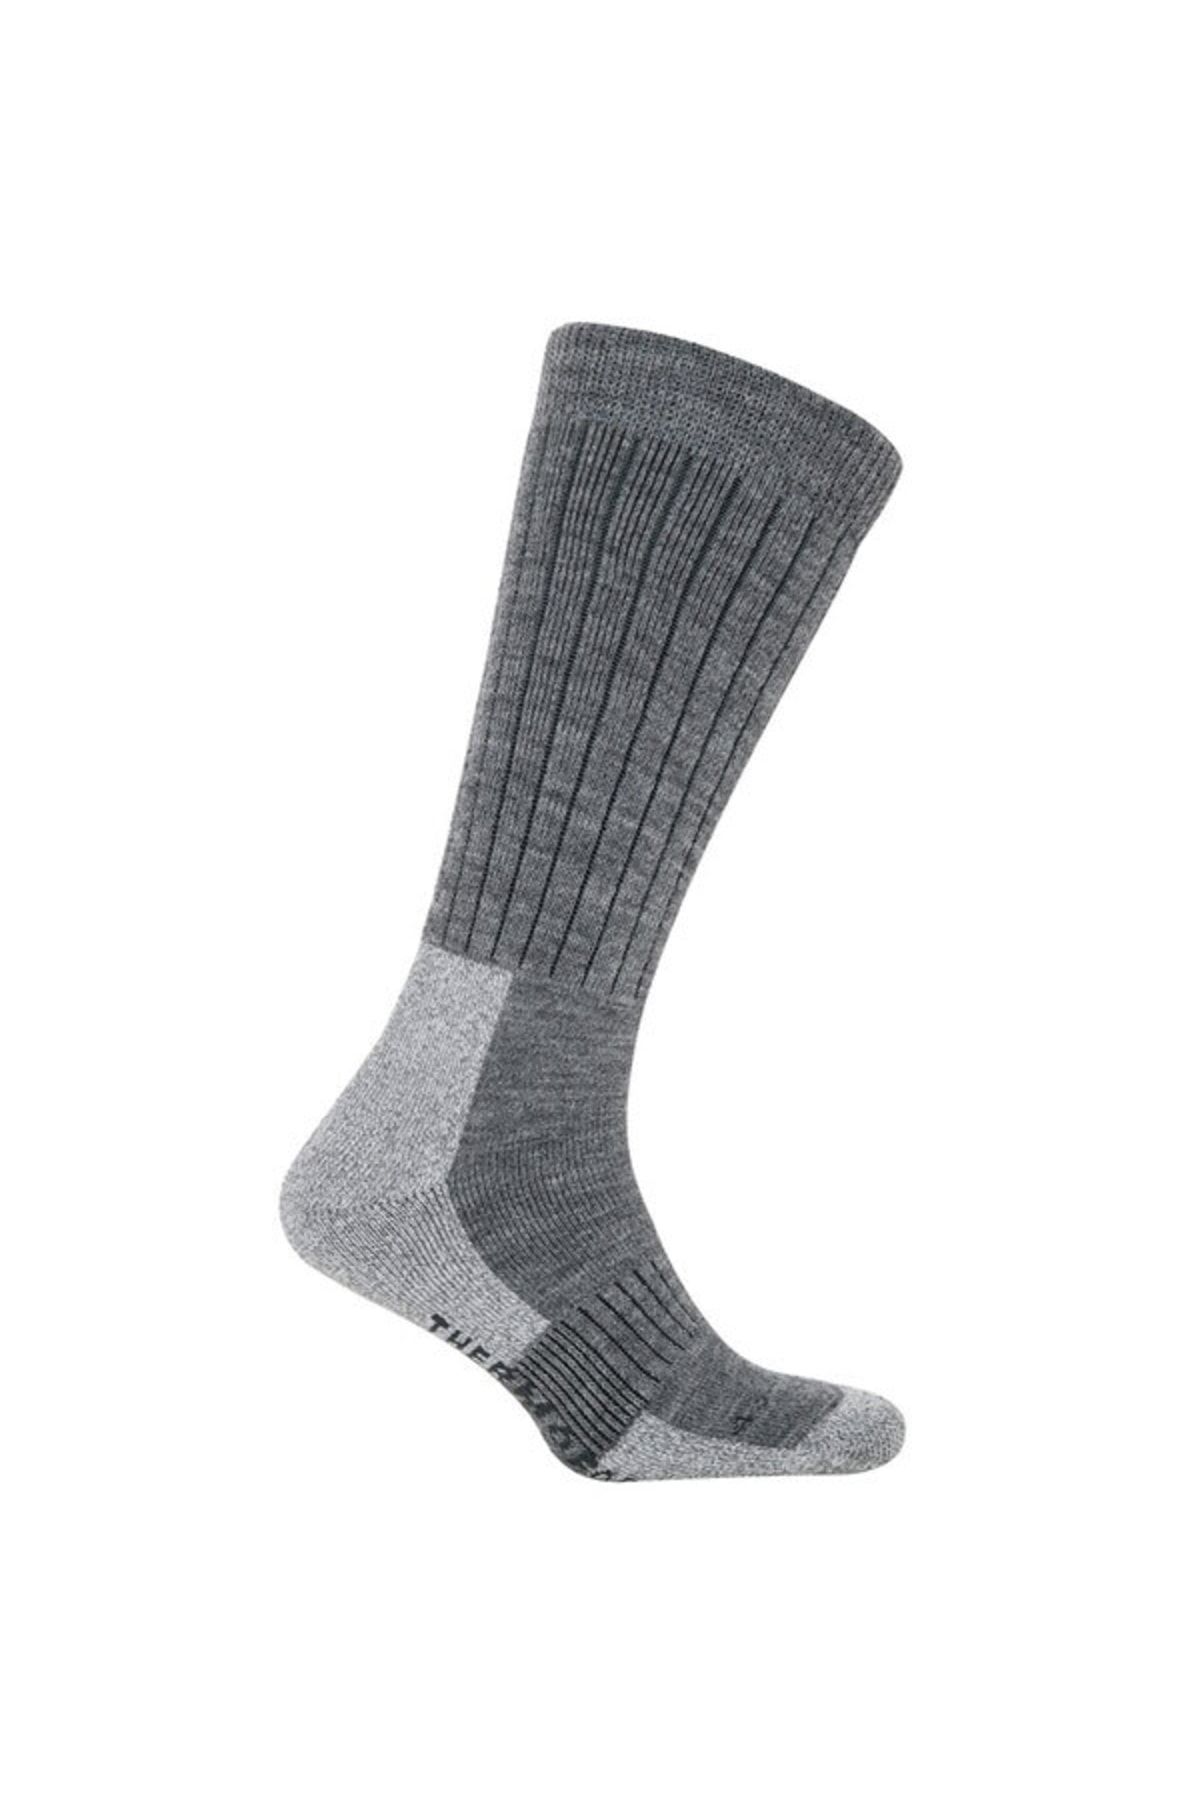 SAVAGE Hzts19 Extreme Çorap Gri 43-46